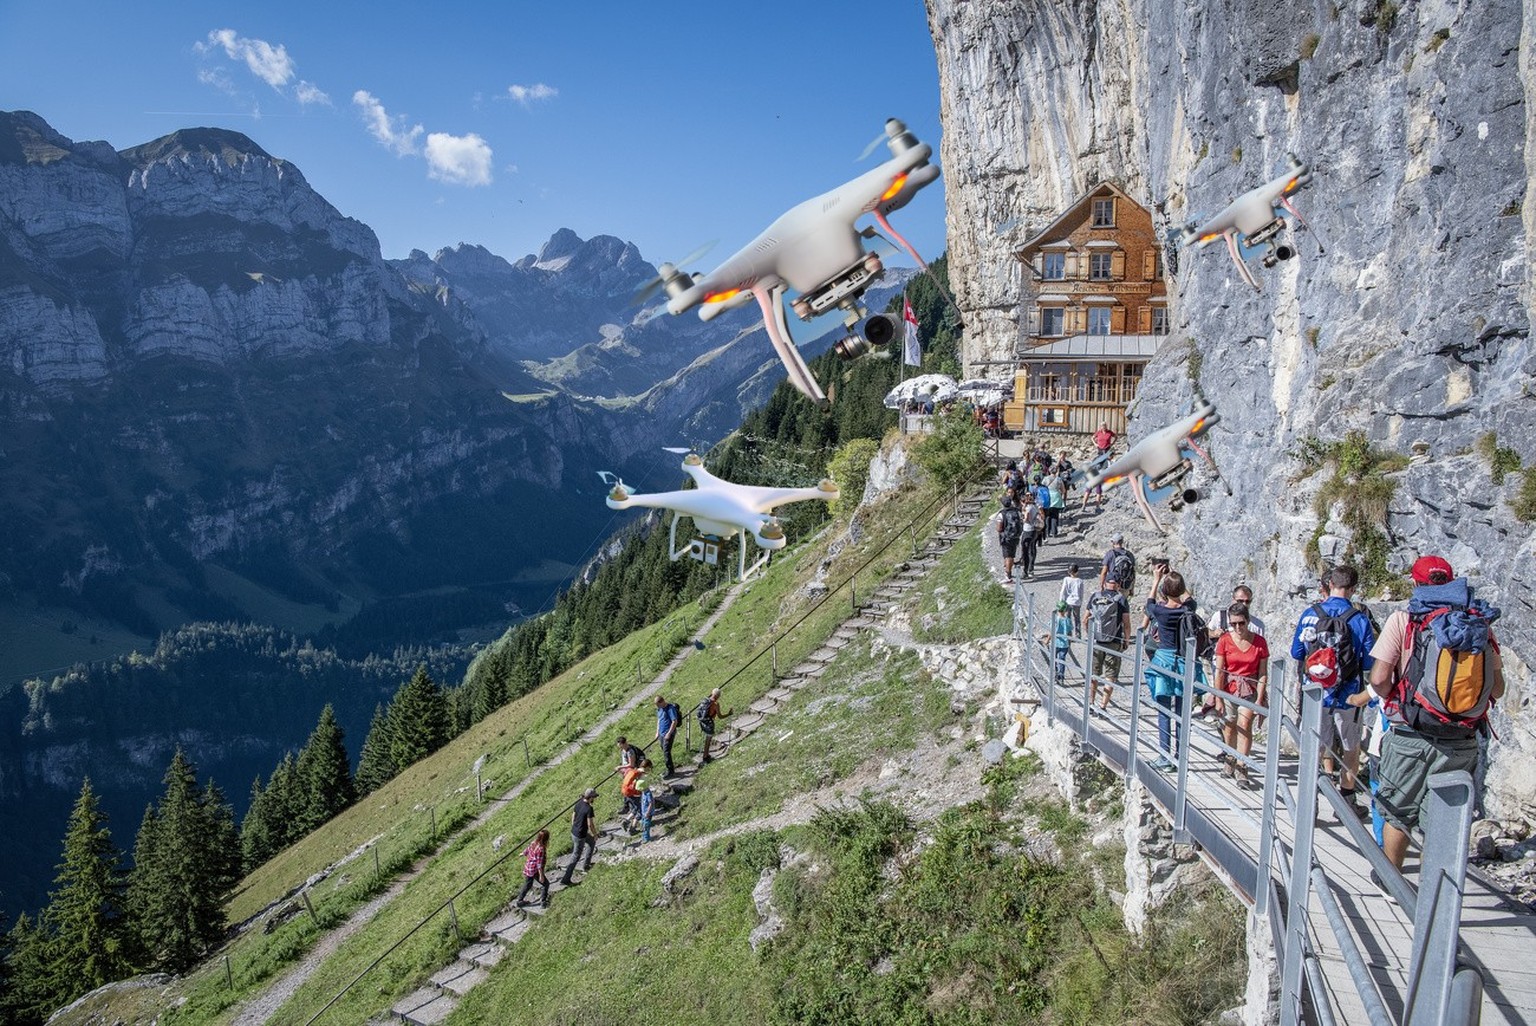 Der grosse Run auf das Berggasthaus Äscher hält an. Nun fliegen täglich Drohnen um den weltberühmten Ort.